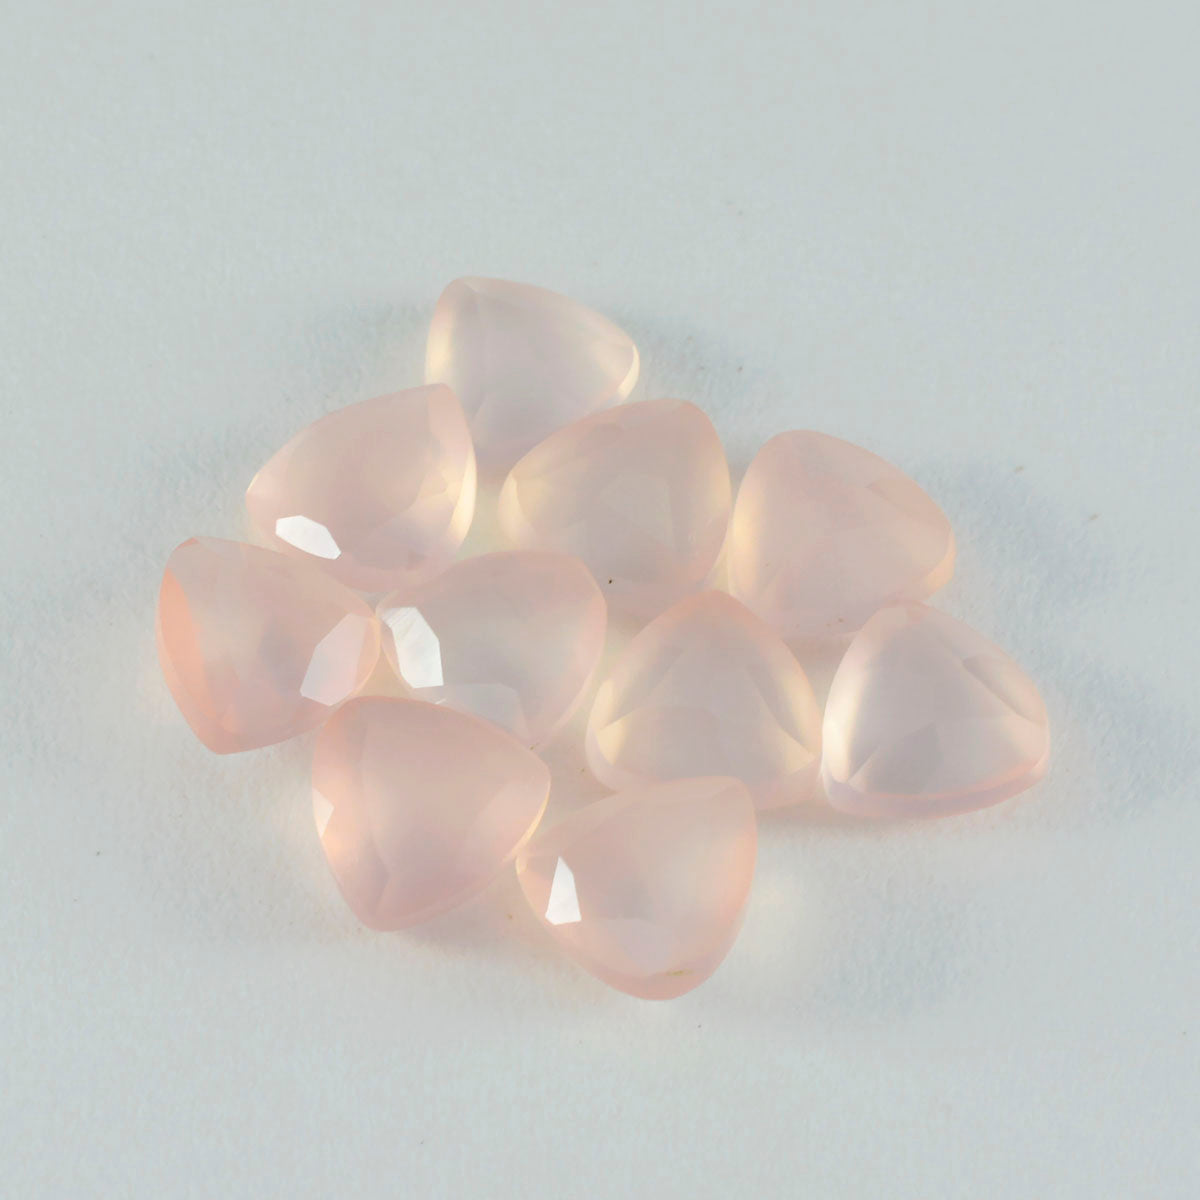 Riyogems 1PC Pink Rose Quartz Faceted 15x15 mm Trillion Shape attractive Quality Loose Gems